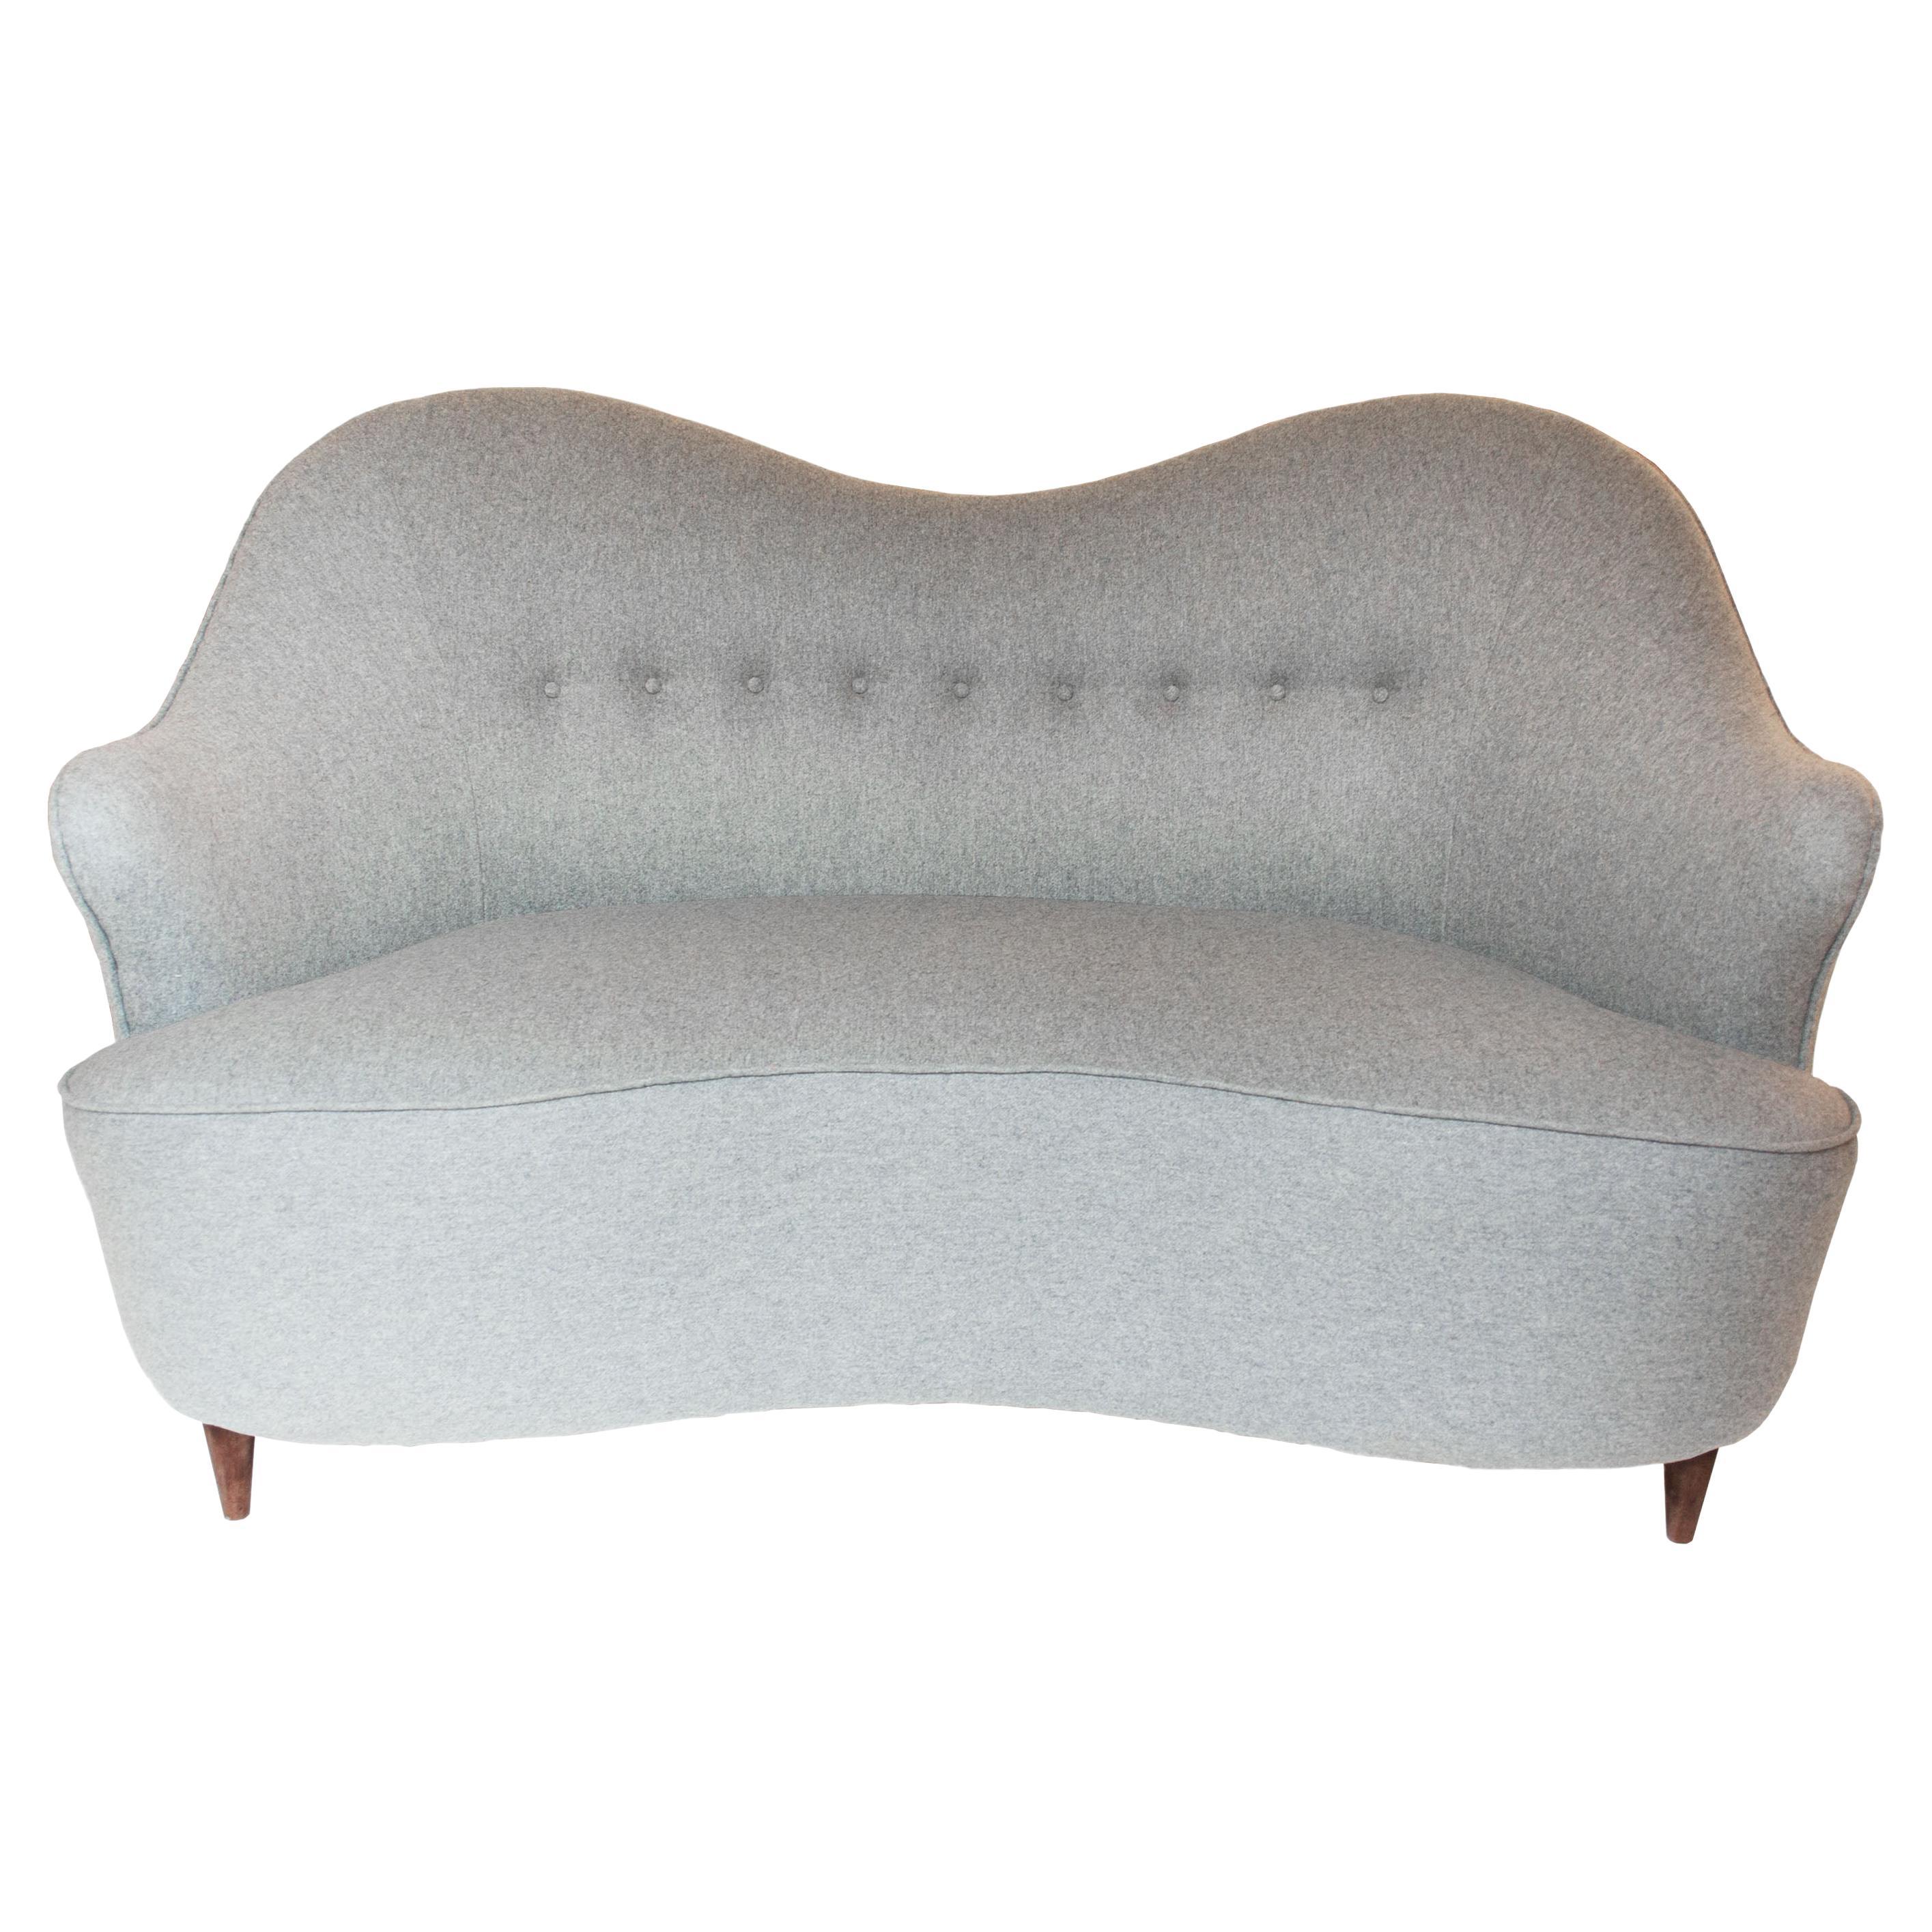 Finn Juhl Style Grey Wool Felt Two Seat Sofa, Italy, 1950